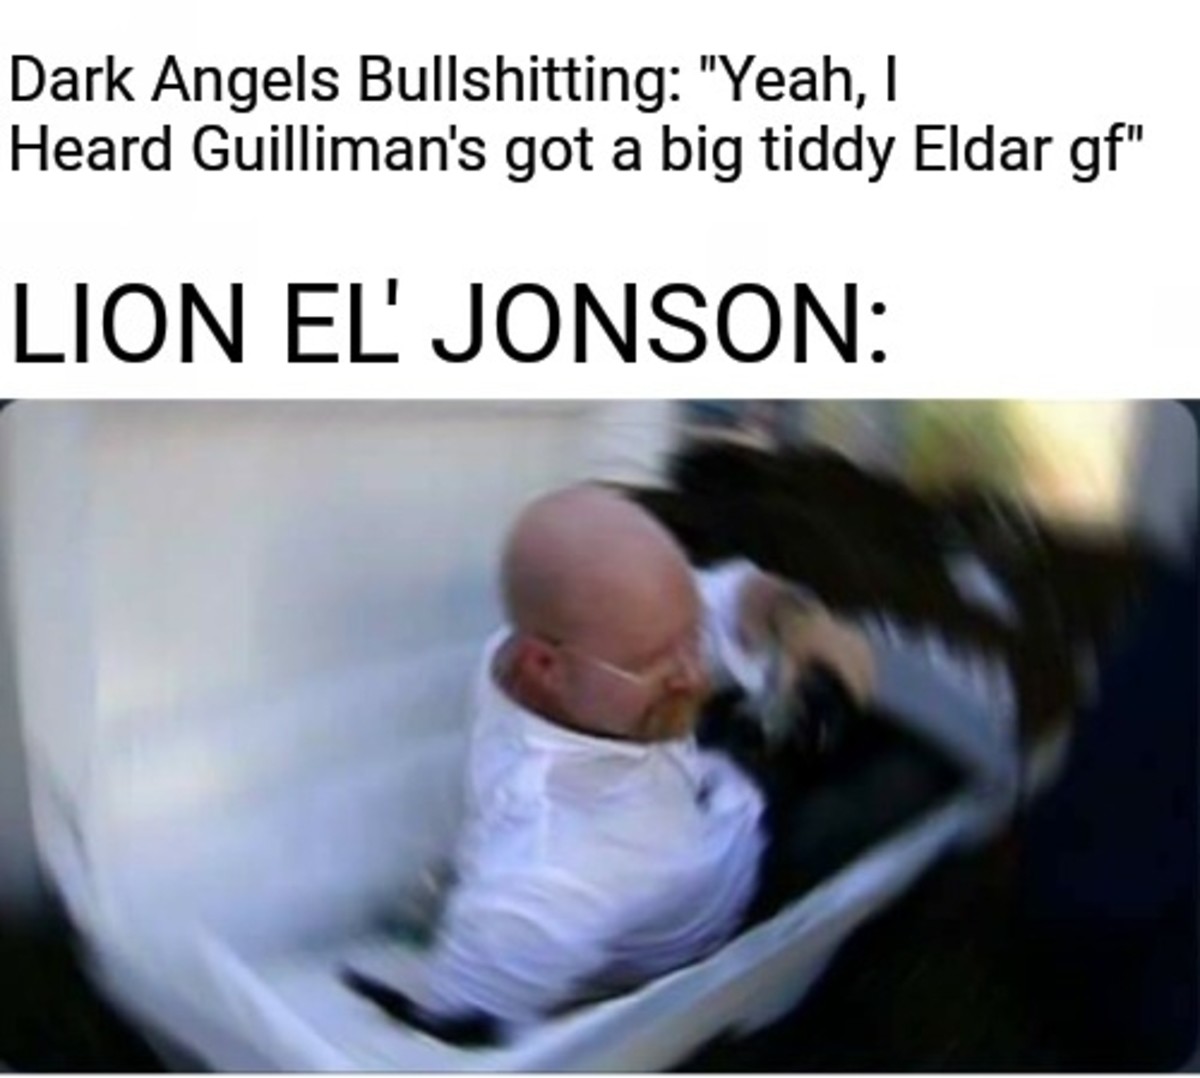 photo caption - Dark Angels Bullshitting "Yeah, I Heard Guilliman's got a big tiddy Eldar gf" Lion El Jonson